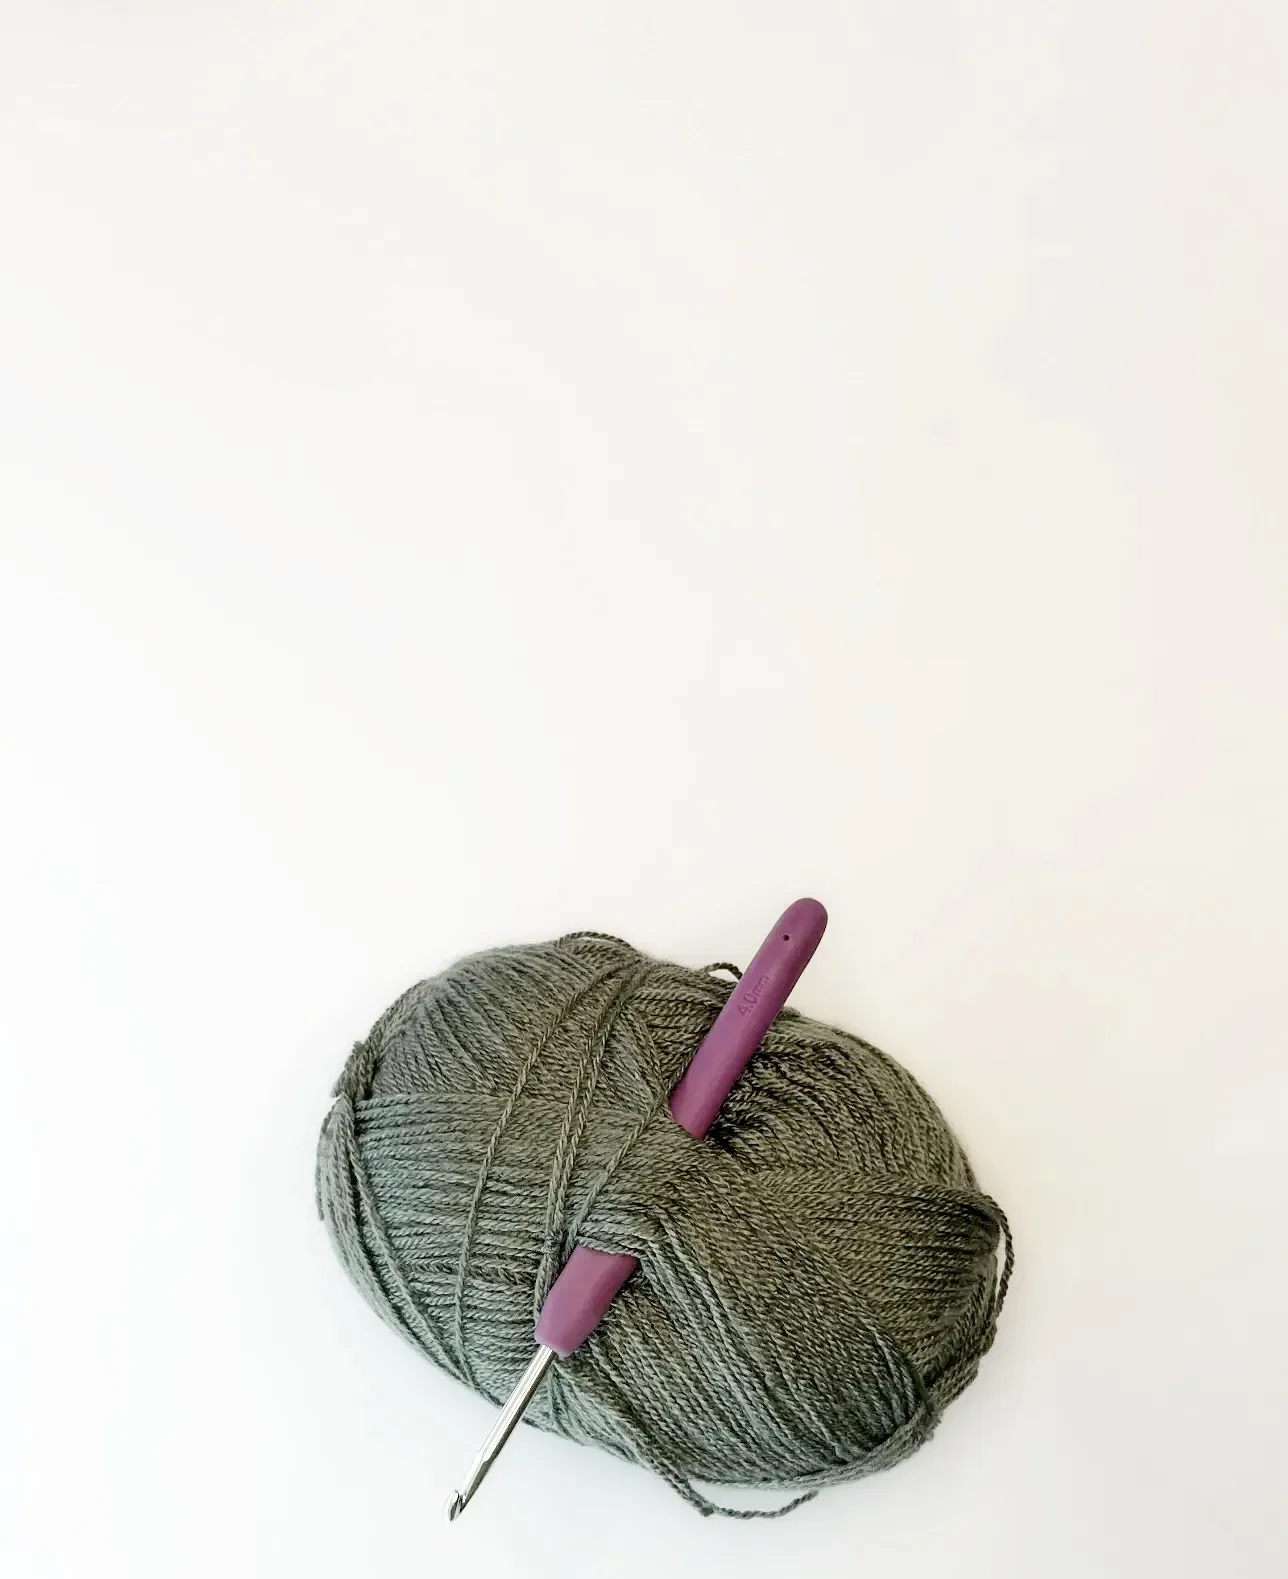 yarn and crochet hook